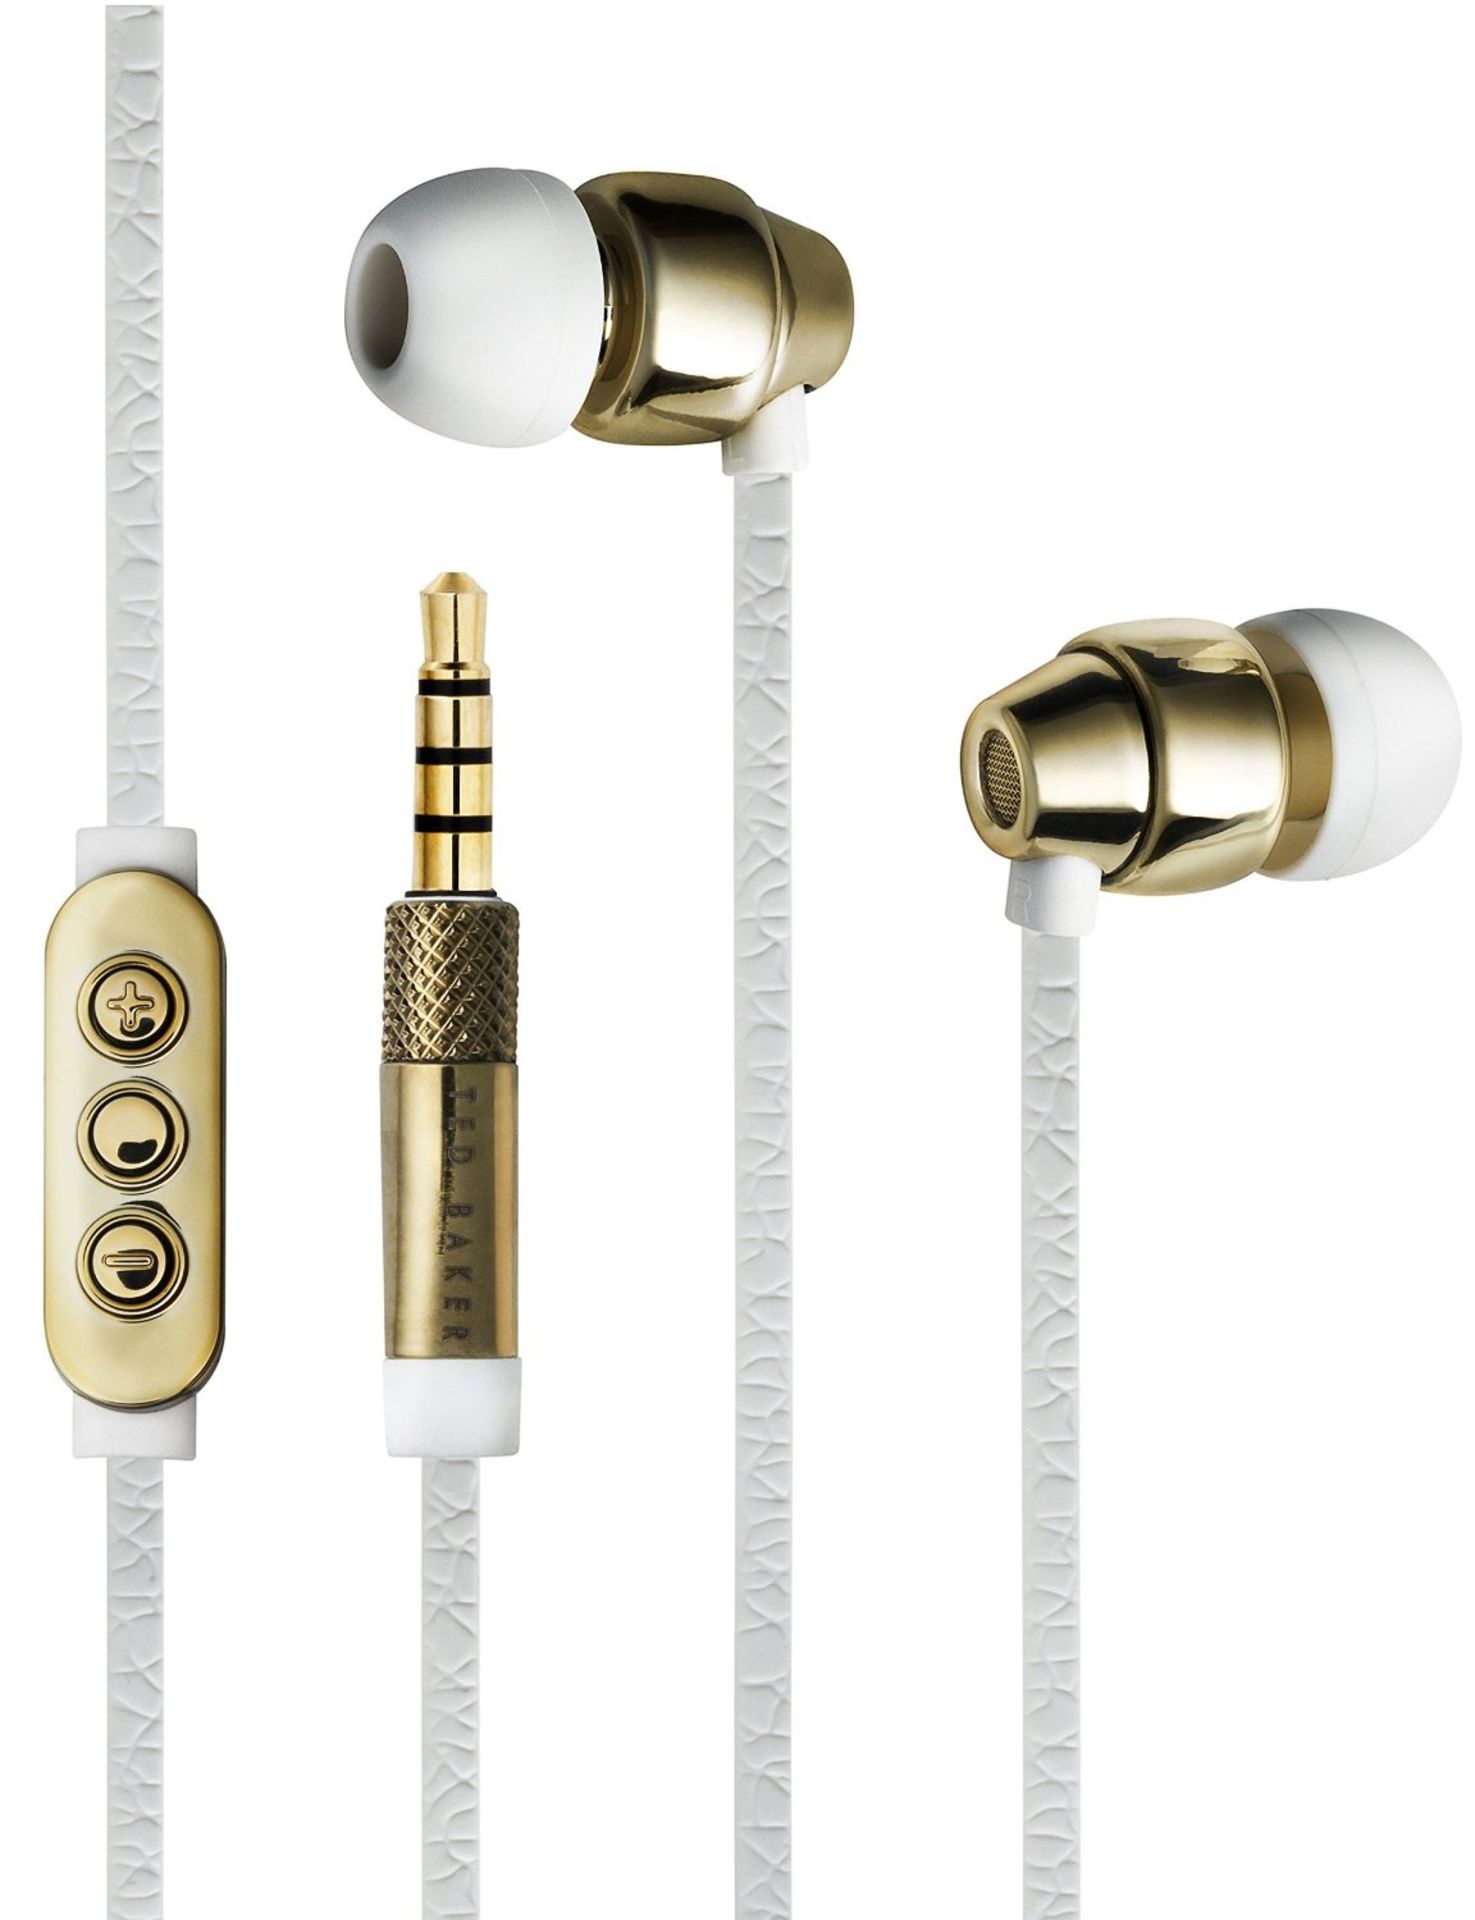 V Brand New Ted Baker Dover High Performance In-Ear Earphones White/Gold RRP £59.99 Amazon Price £